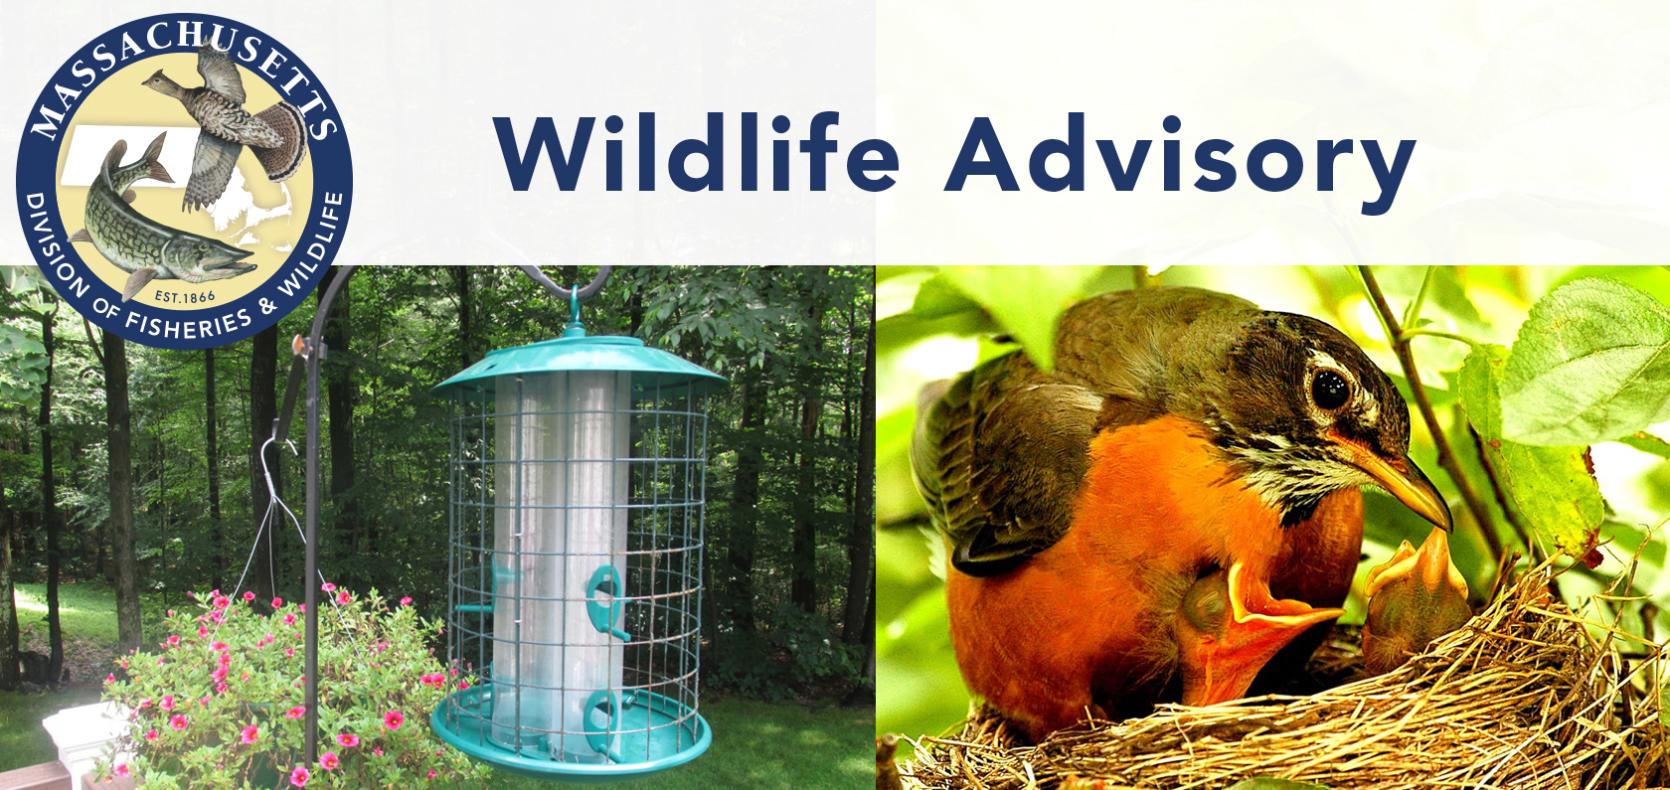 Wildlife Advisory with bird feeder and robins